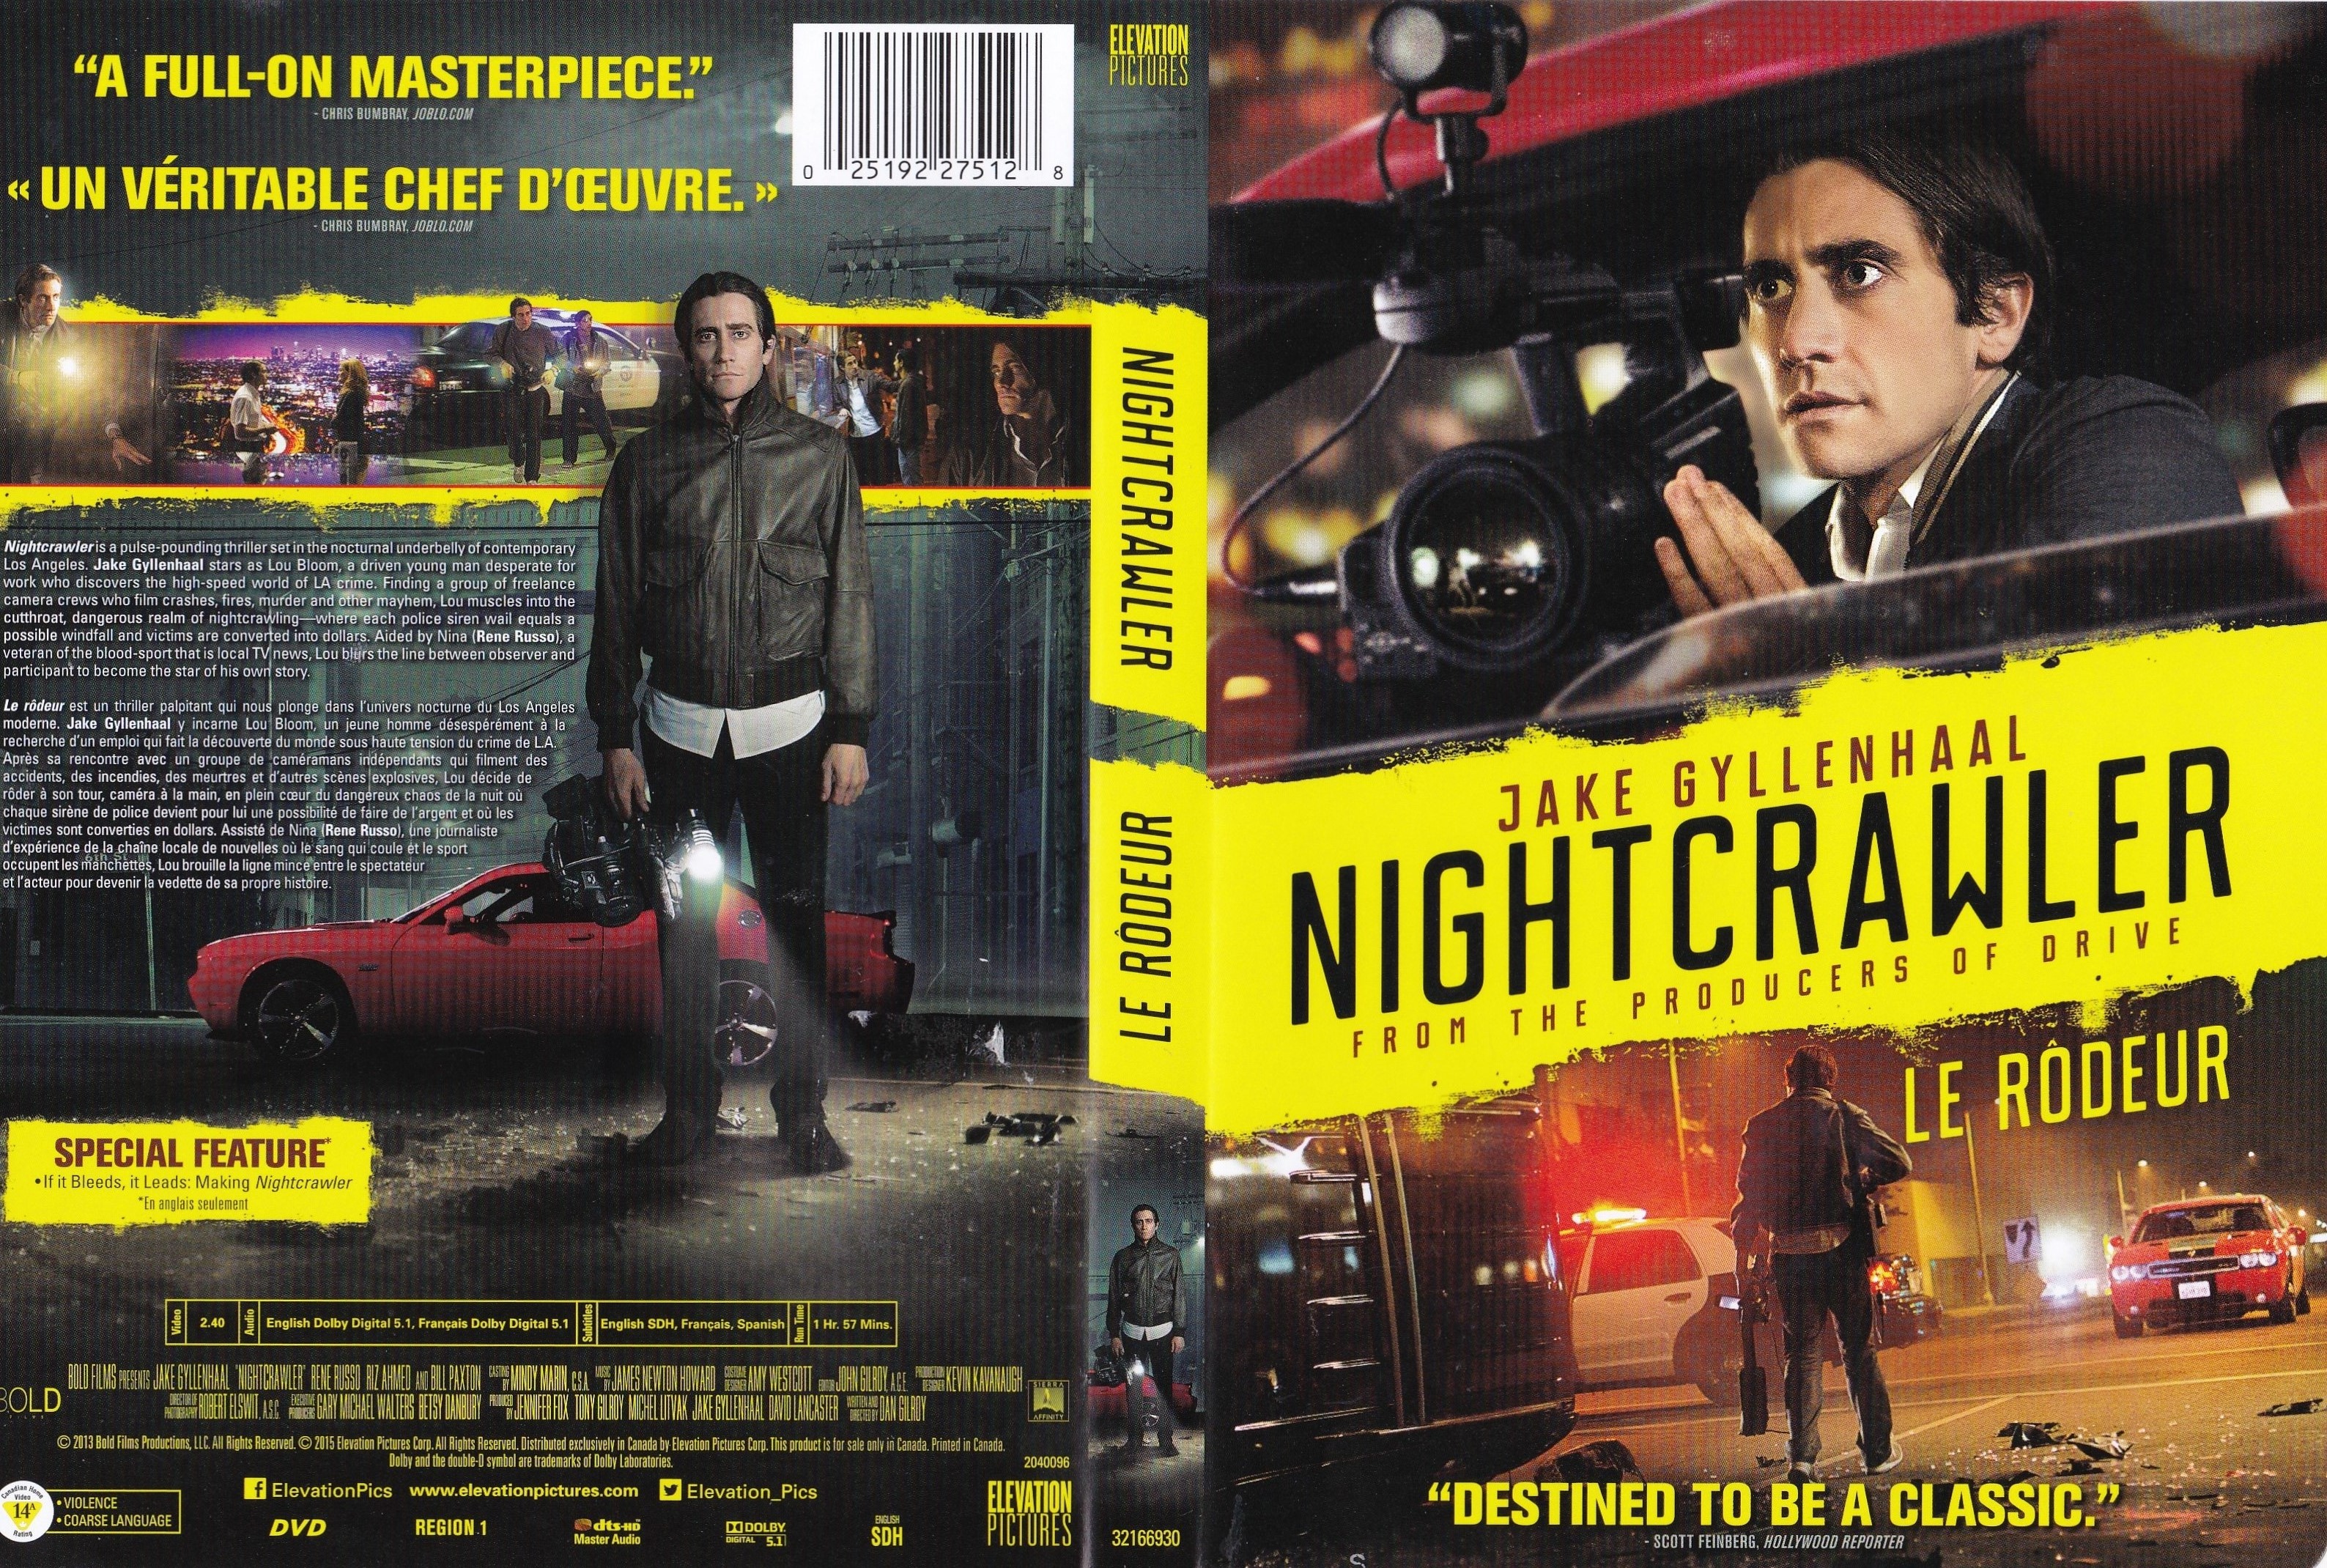 Jaquette DVD Le rodeur - Nightcrawler (canadienne)